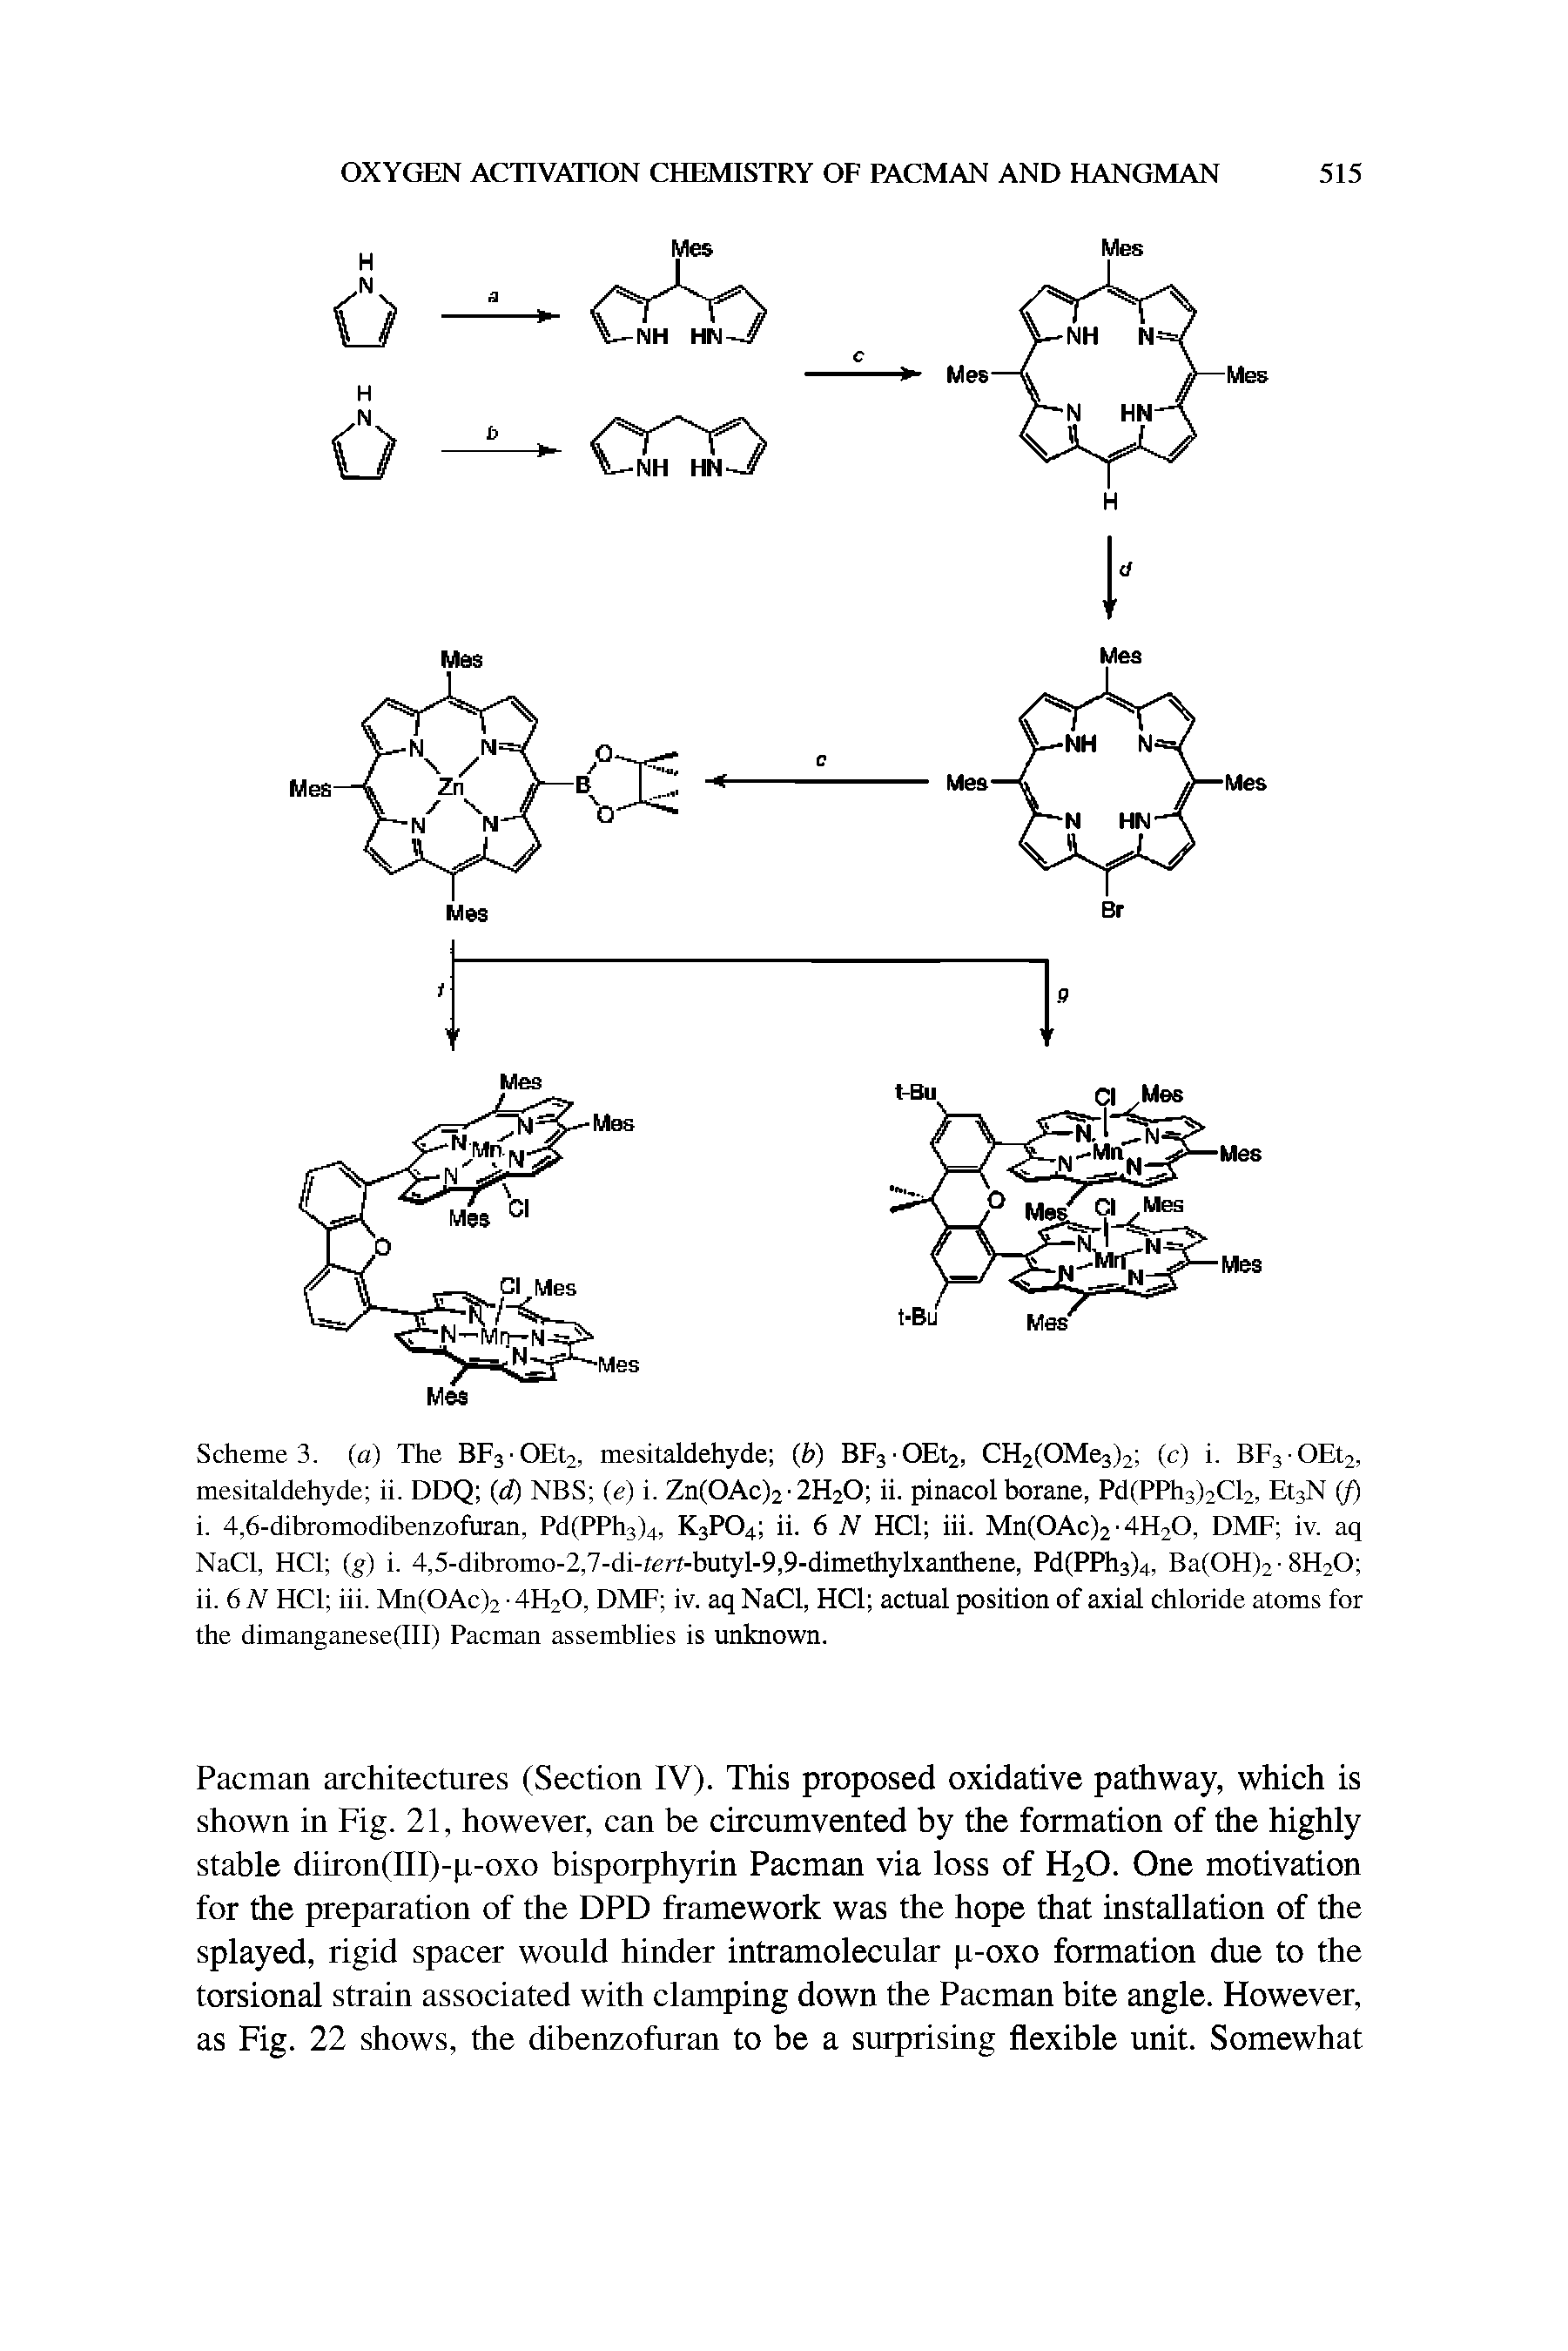 Schemes, (a) The Bp3-OEt2, mesitaldehyde (b) Bp3-OEt2, CH2(OMe3)2 (c) i. BF3-OEt2, mesitaldehyde ii. DDQ (d) NBS (e) i. Zn(0Ac)2-2H20 ii. pinacol borane, Pd(PPh3)2Cl2, EtsN (f)...